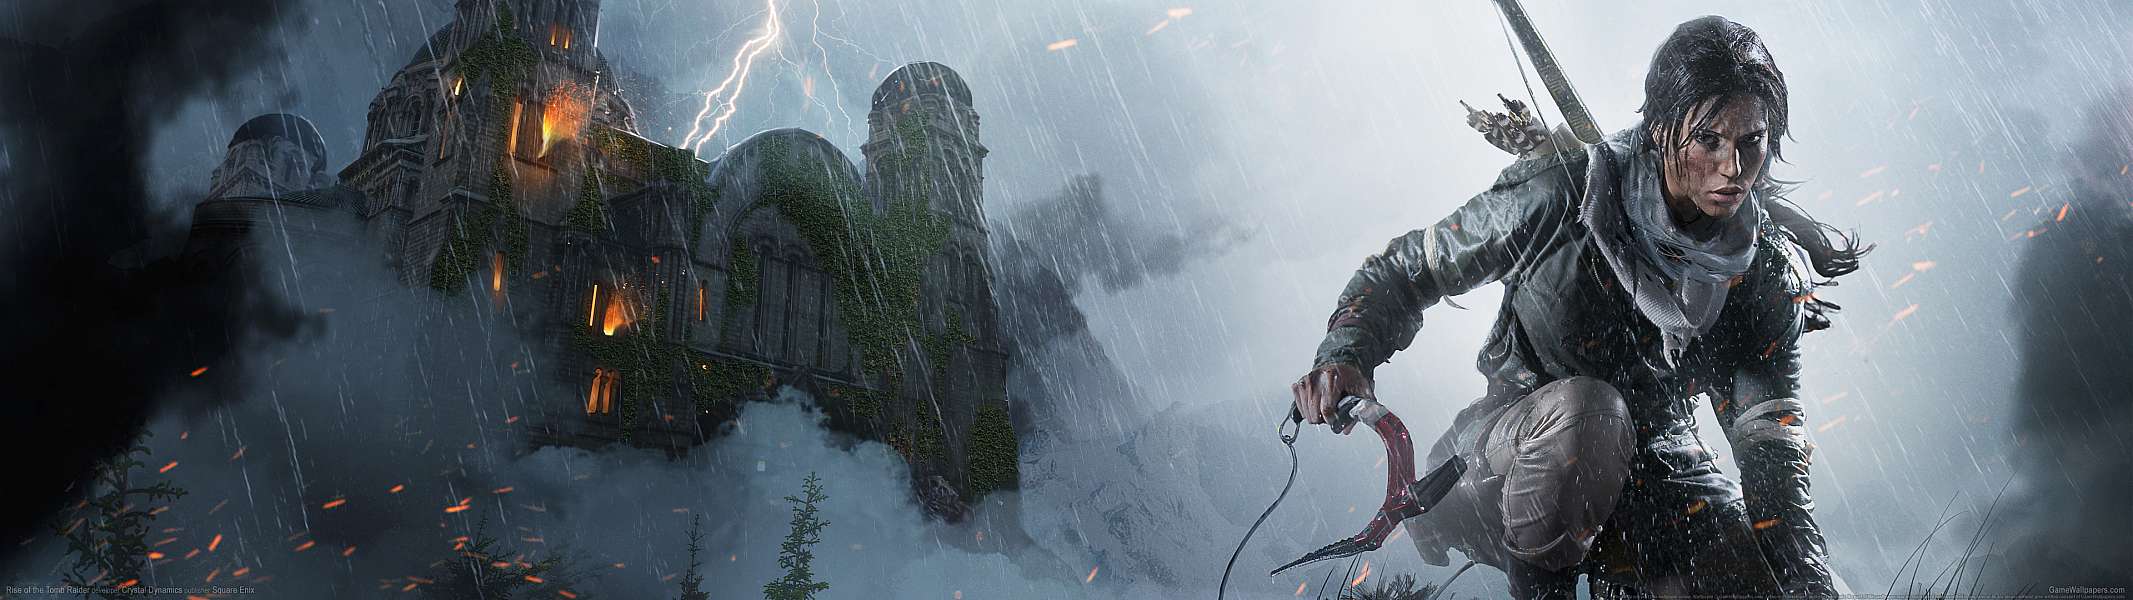 Rise of the Tomb Raider dual screen fond d'cran